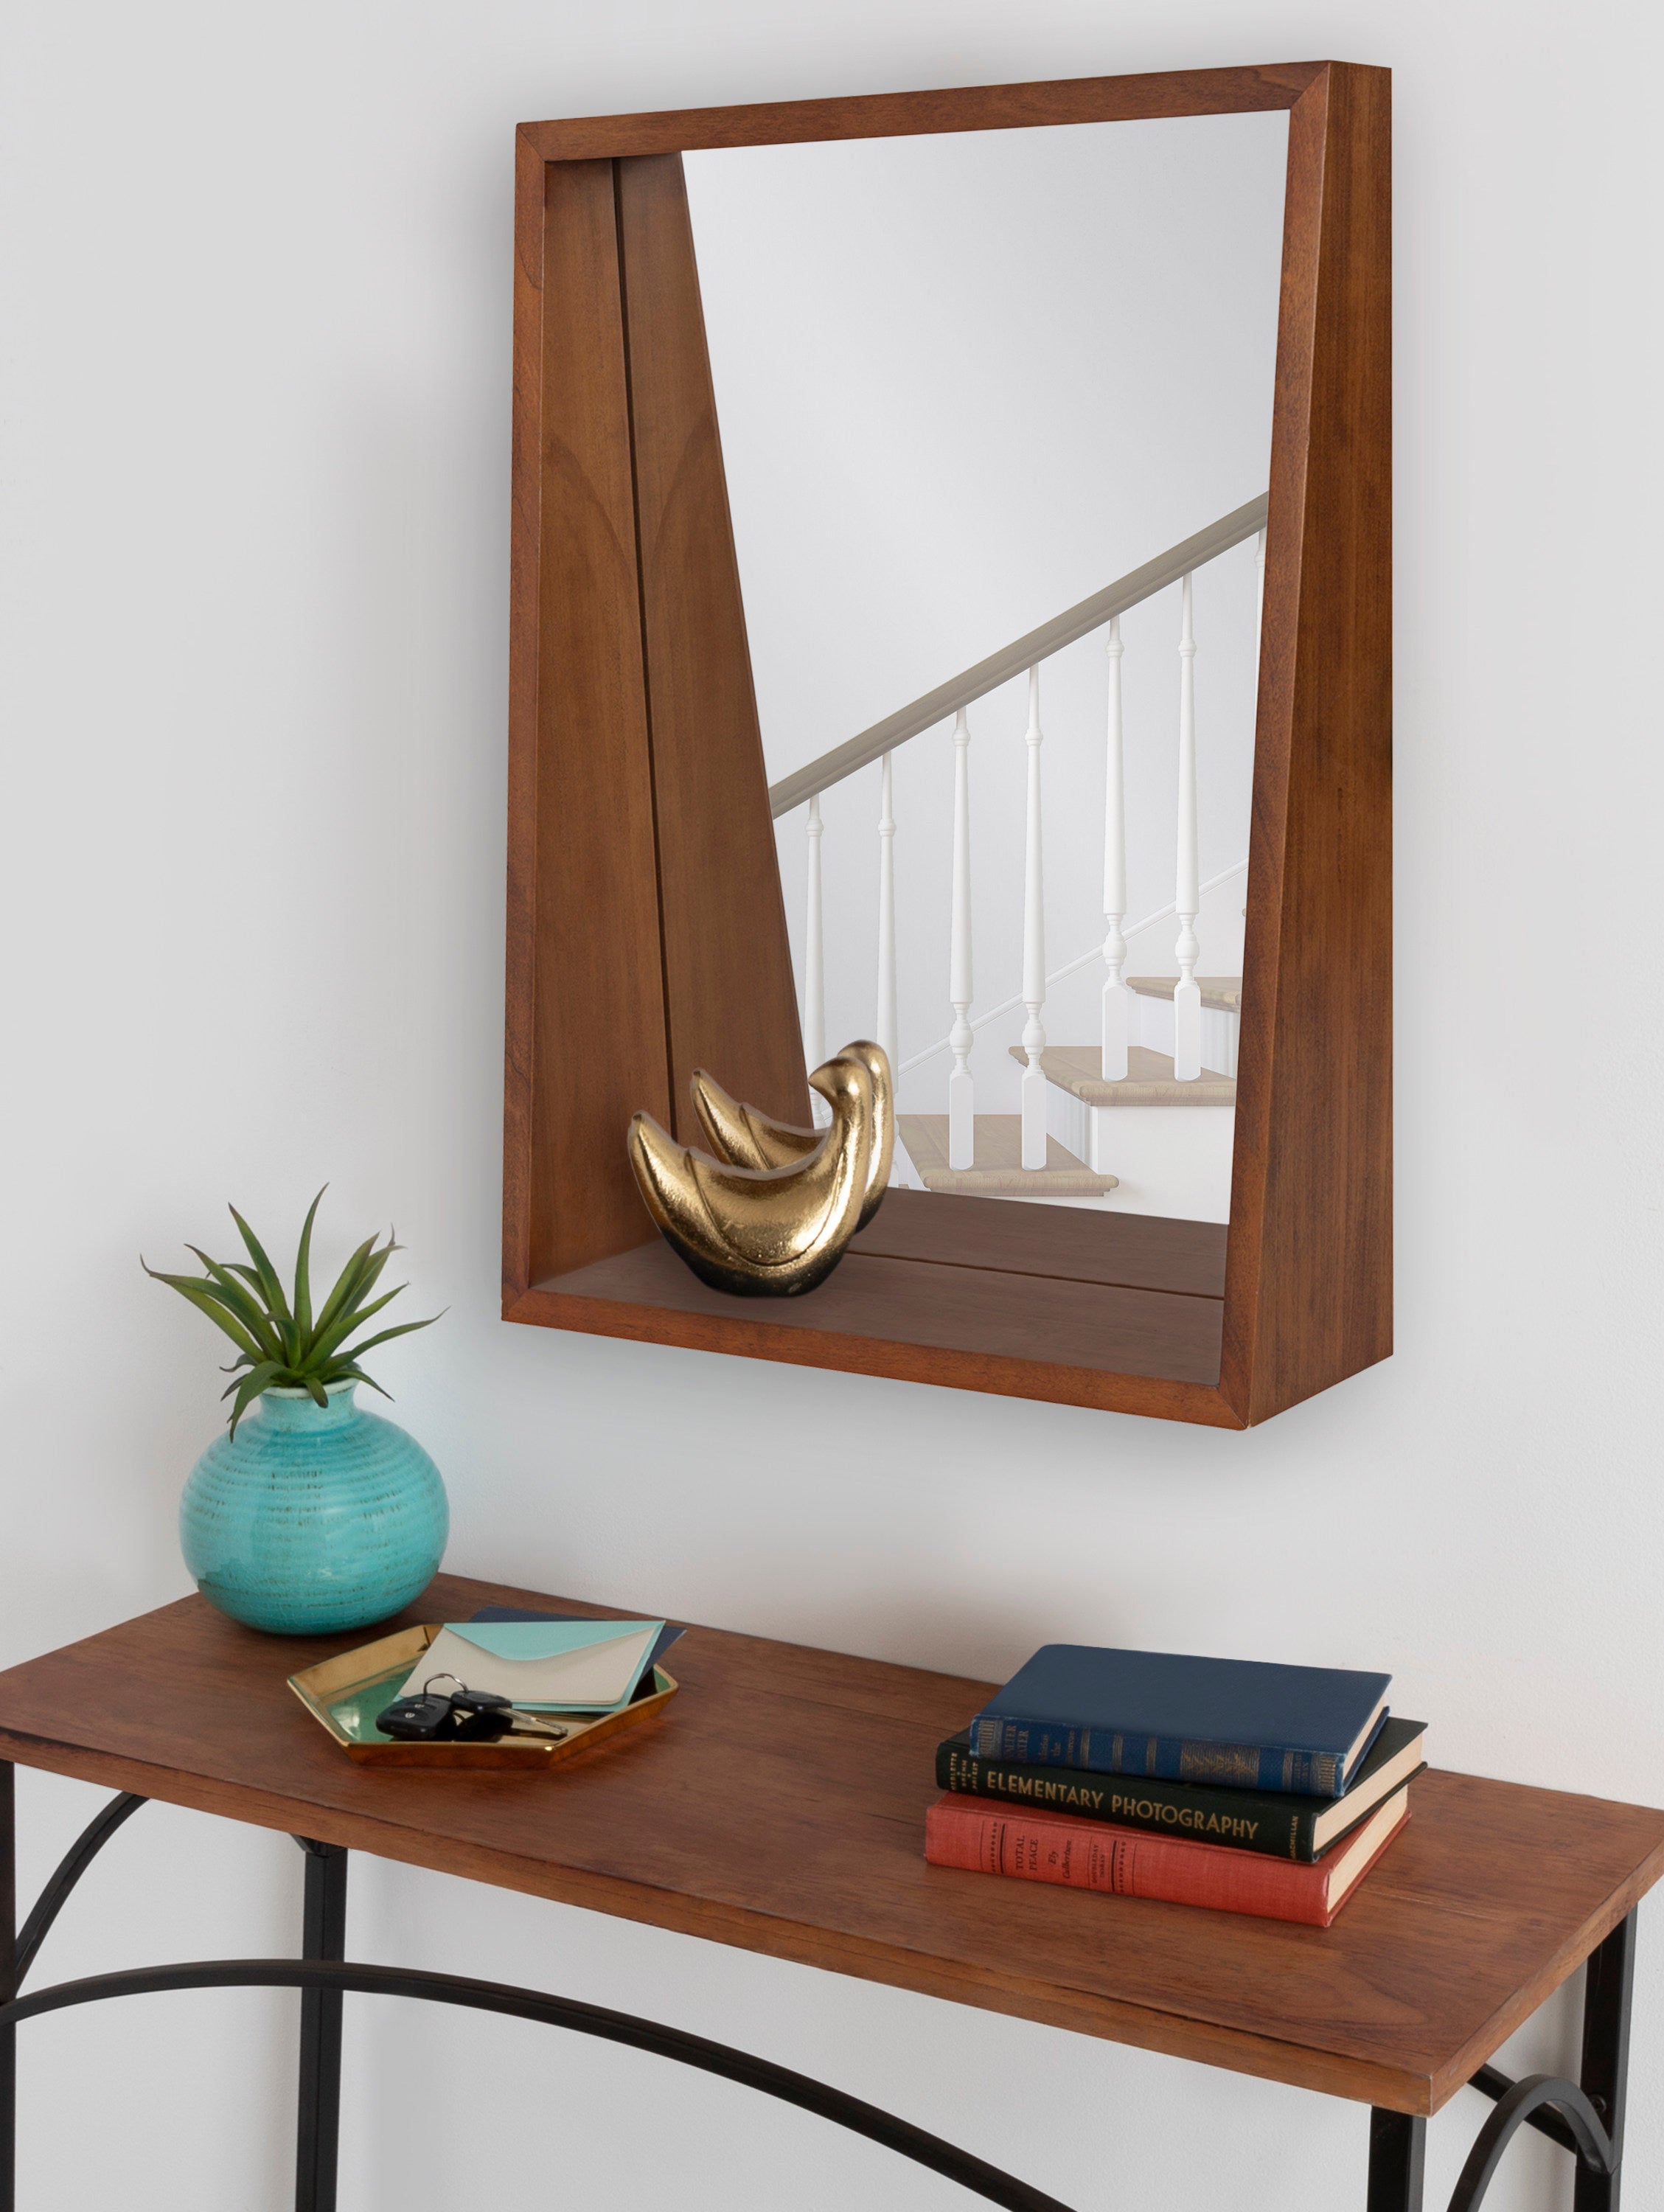 Hutton Wood Framed Wall Mirror with Shelf